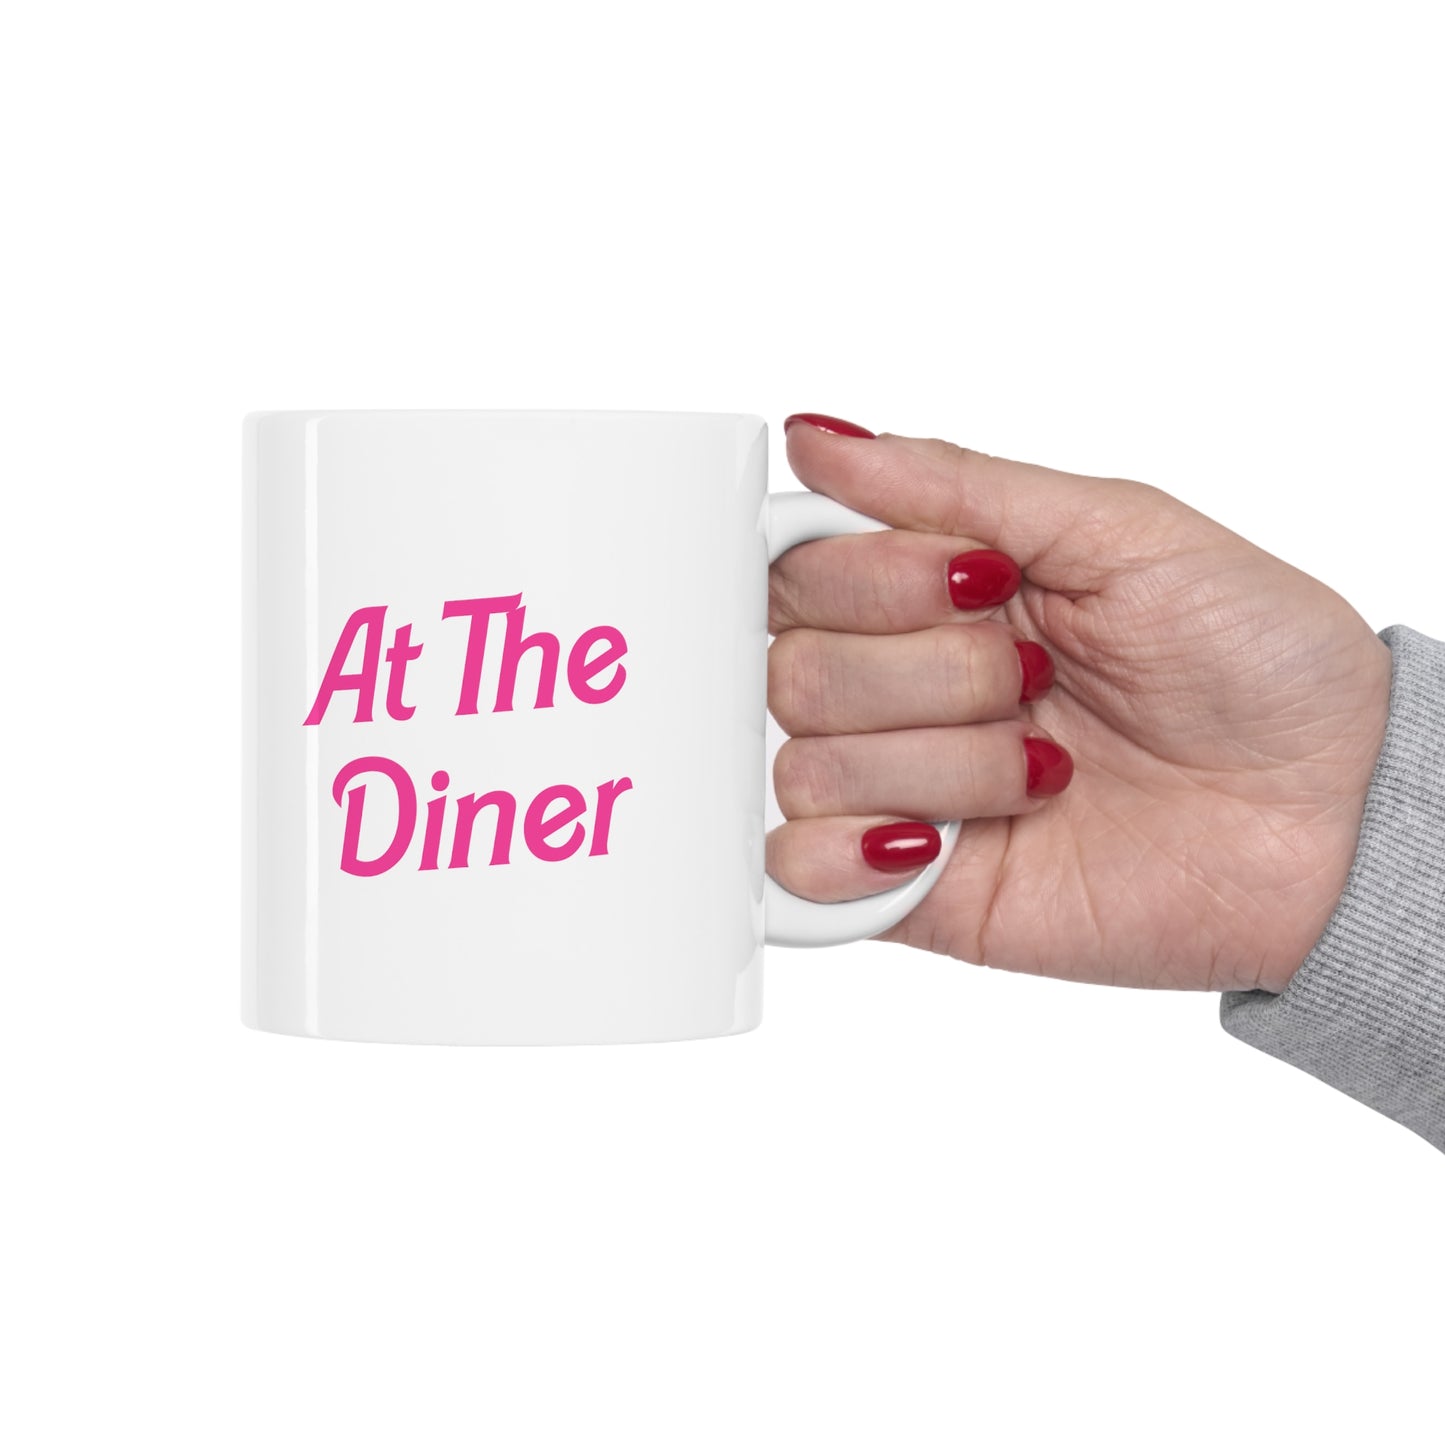 No One Finer At The Diner Mug